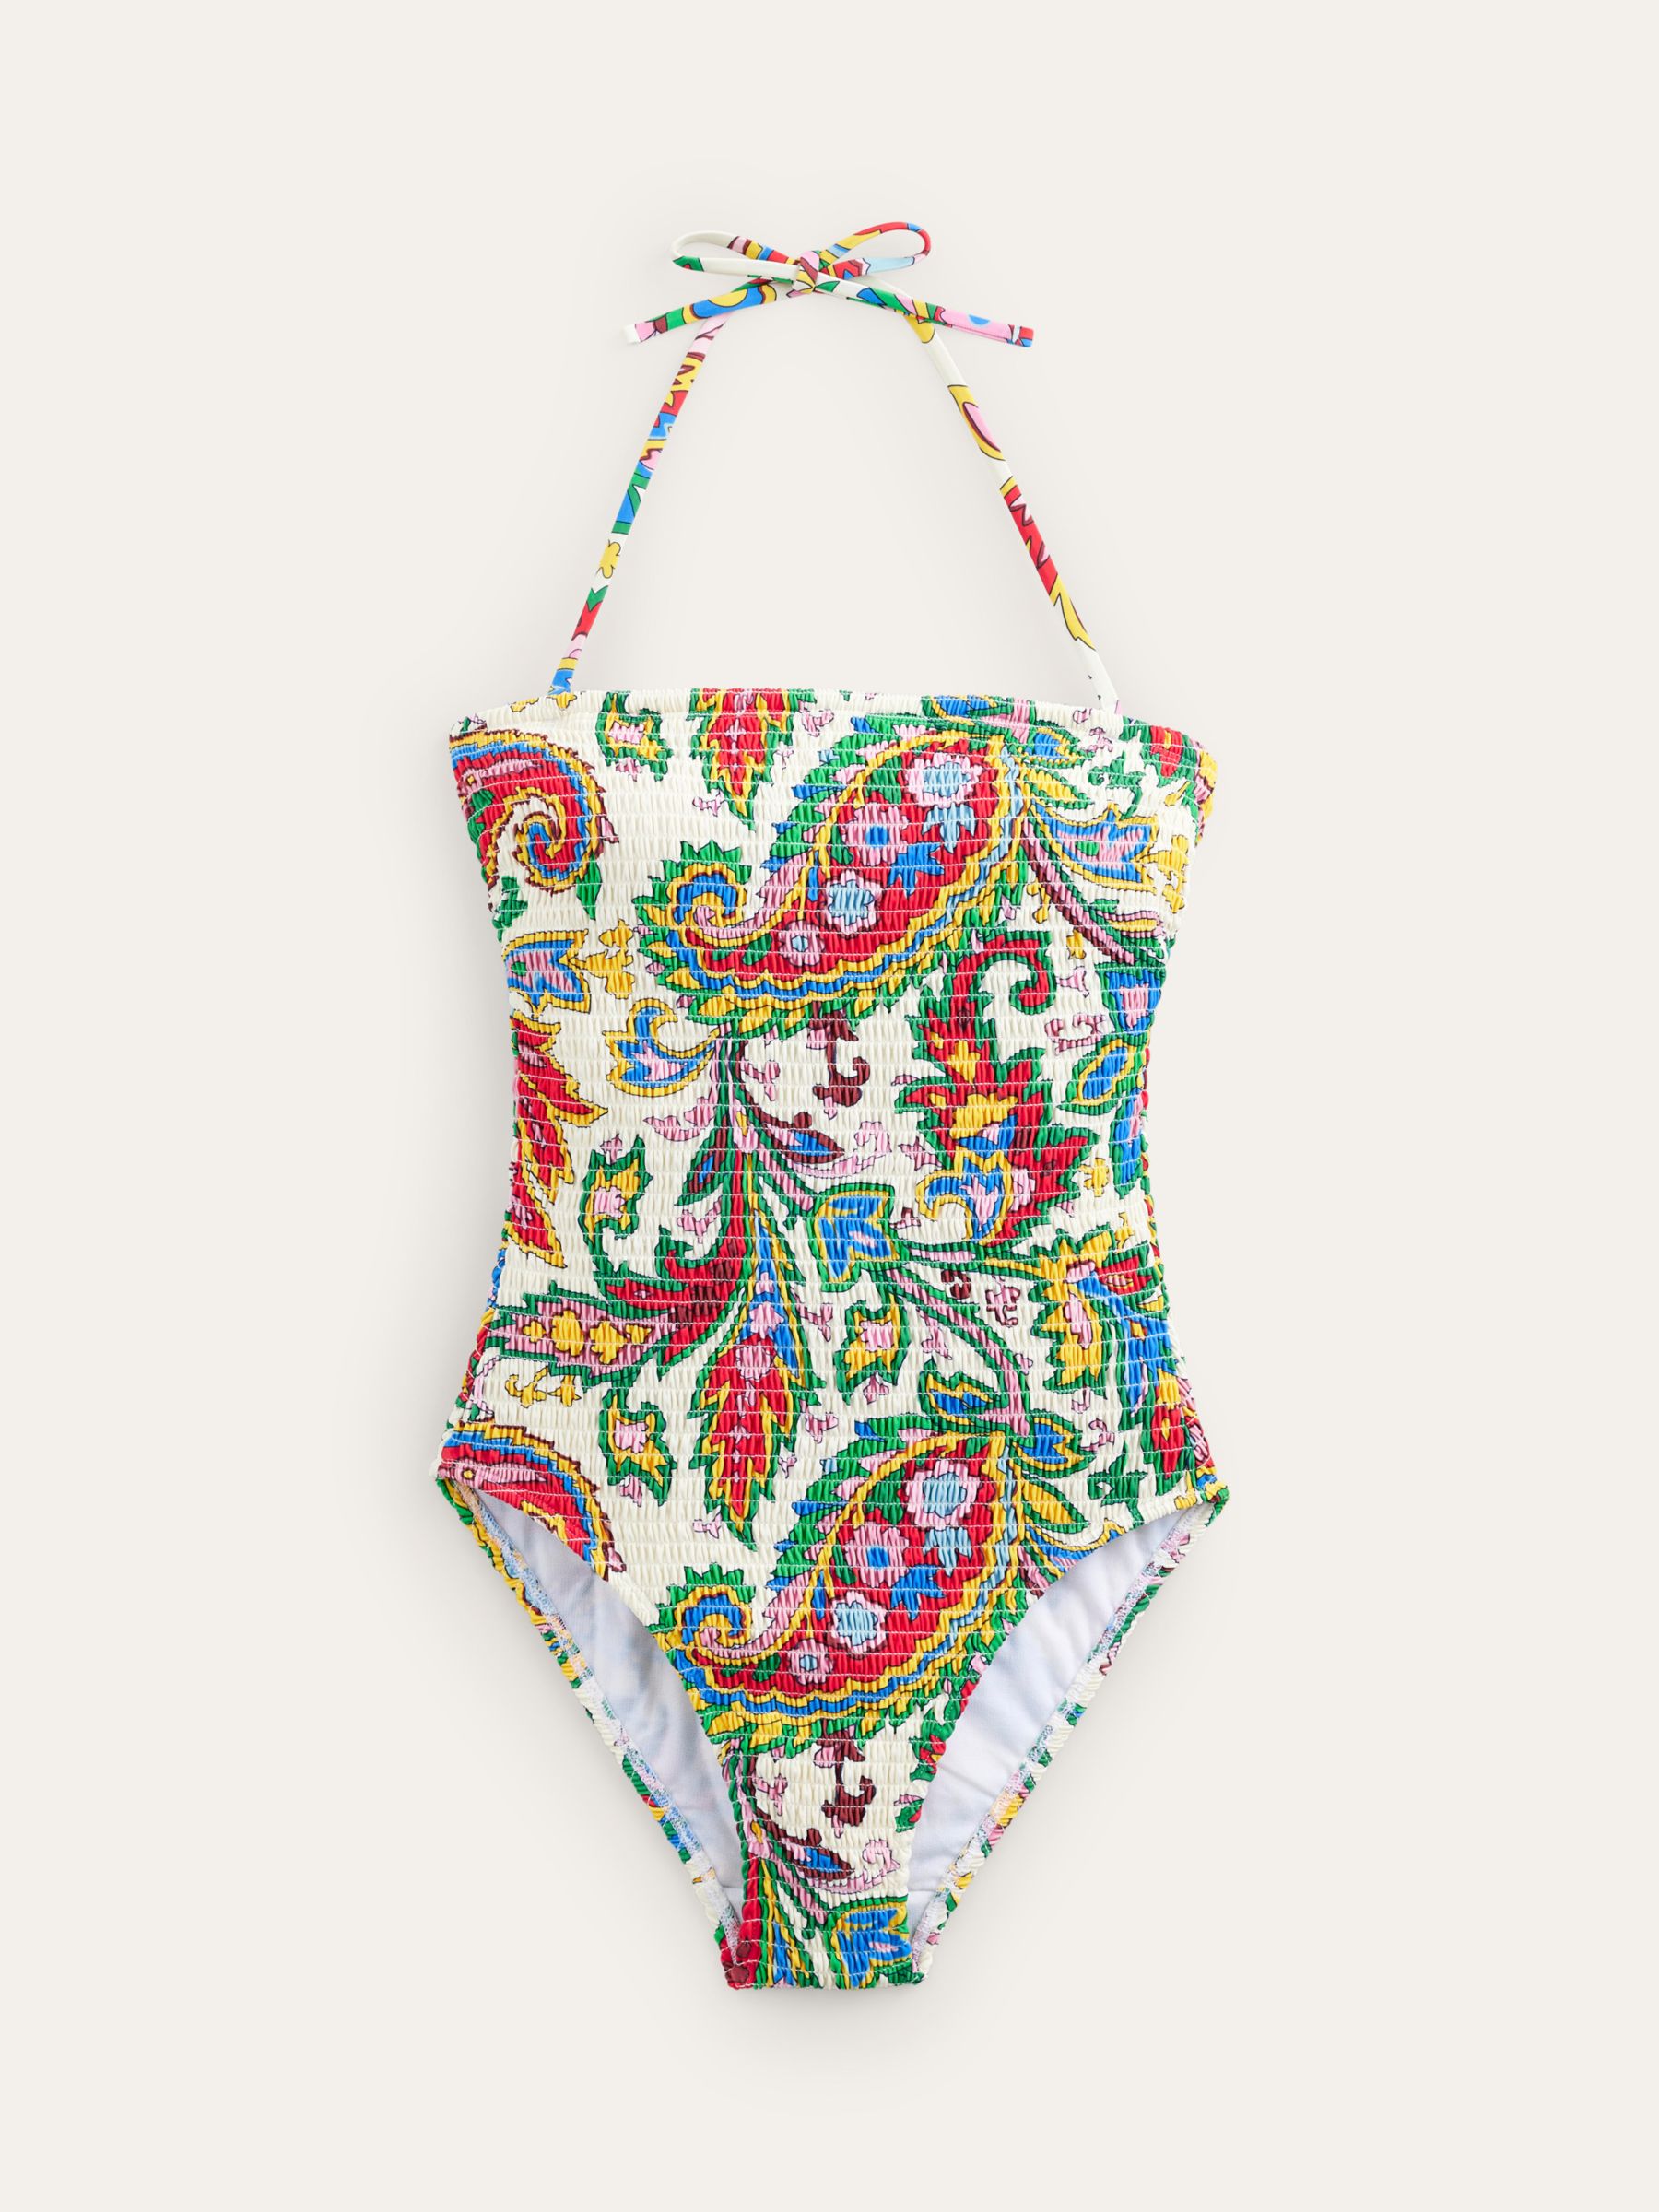 Boden Milos Smocked Paisley Print Bandeau Swimsuit, Ivory/Multi, 14